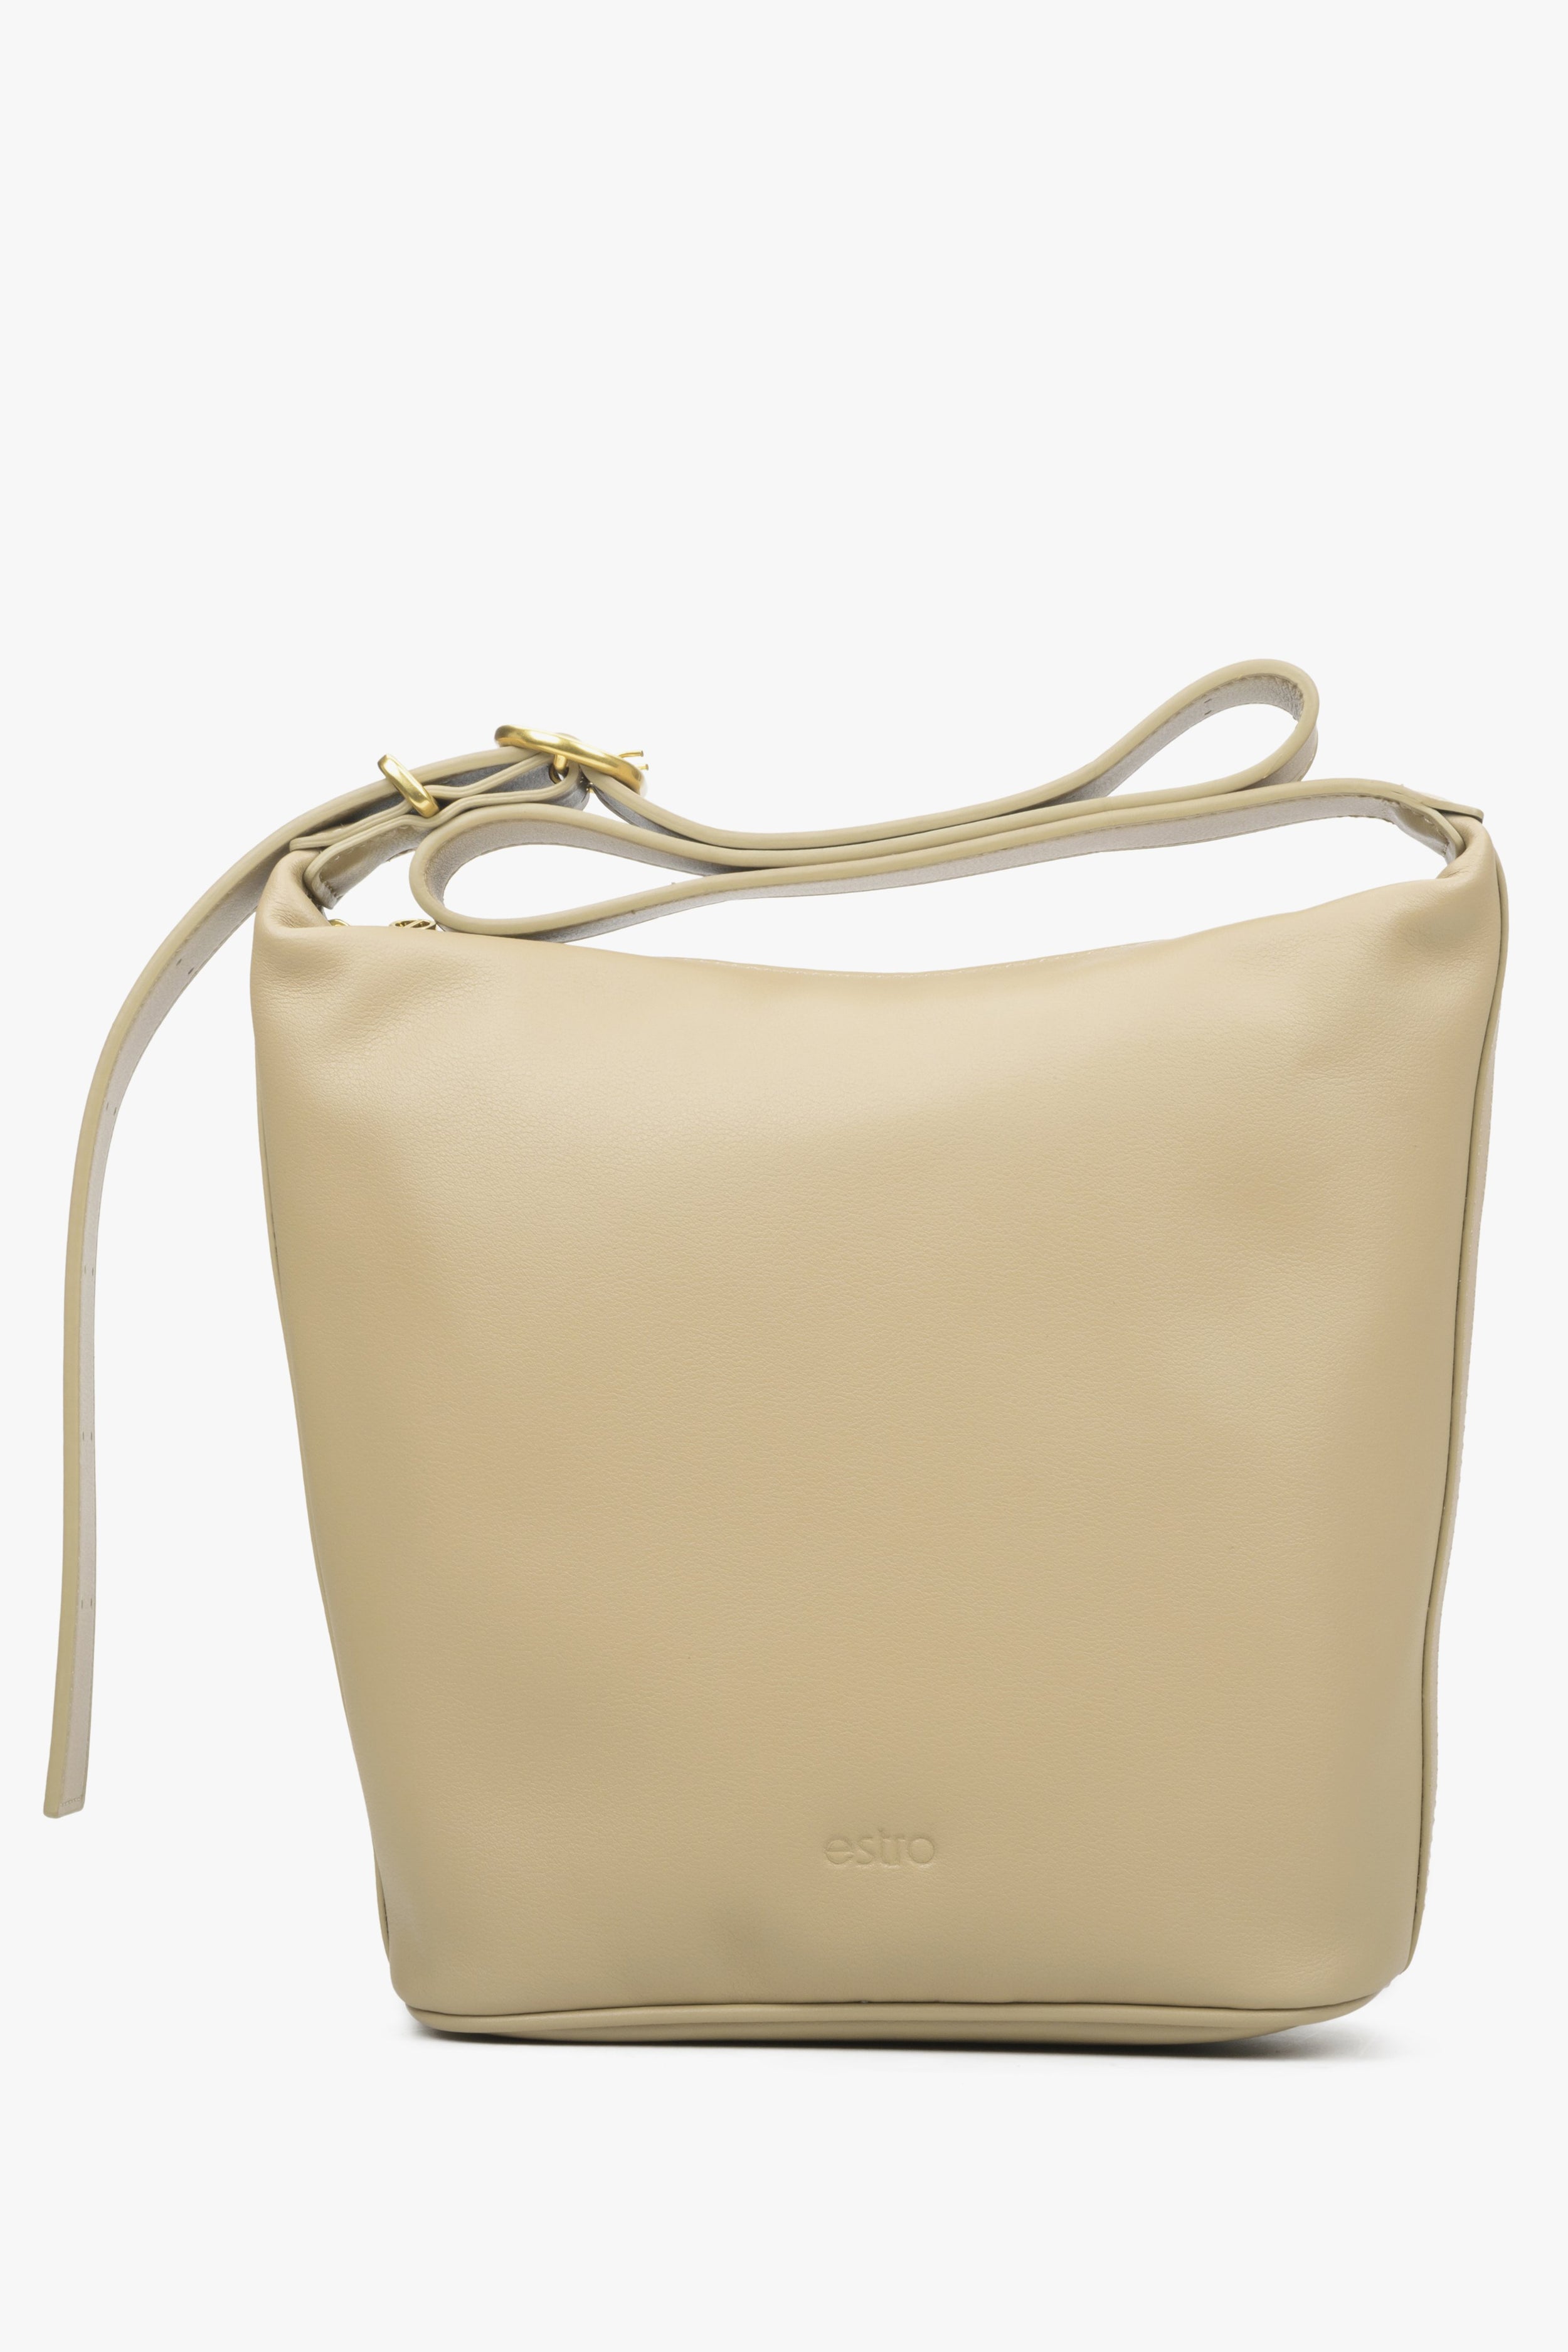 Estro: Beżowa torebka na ramię typu worek ze skóry naturalnej